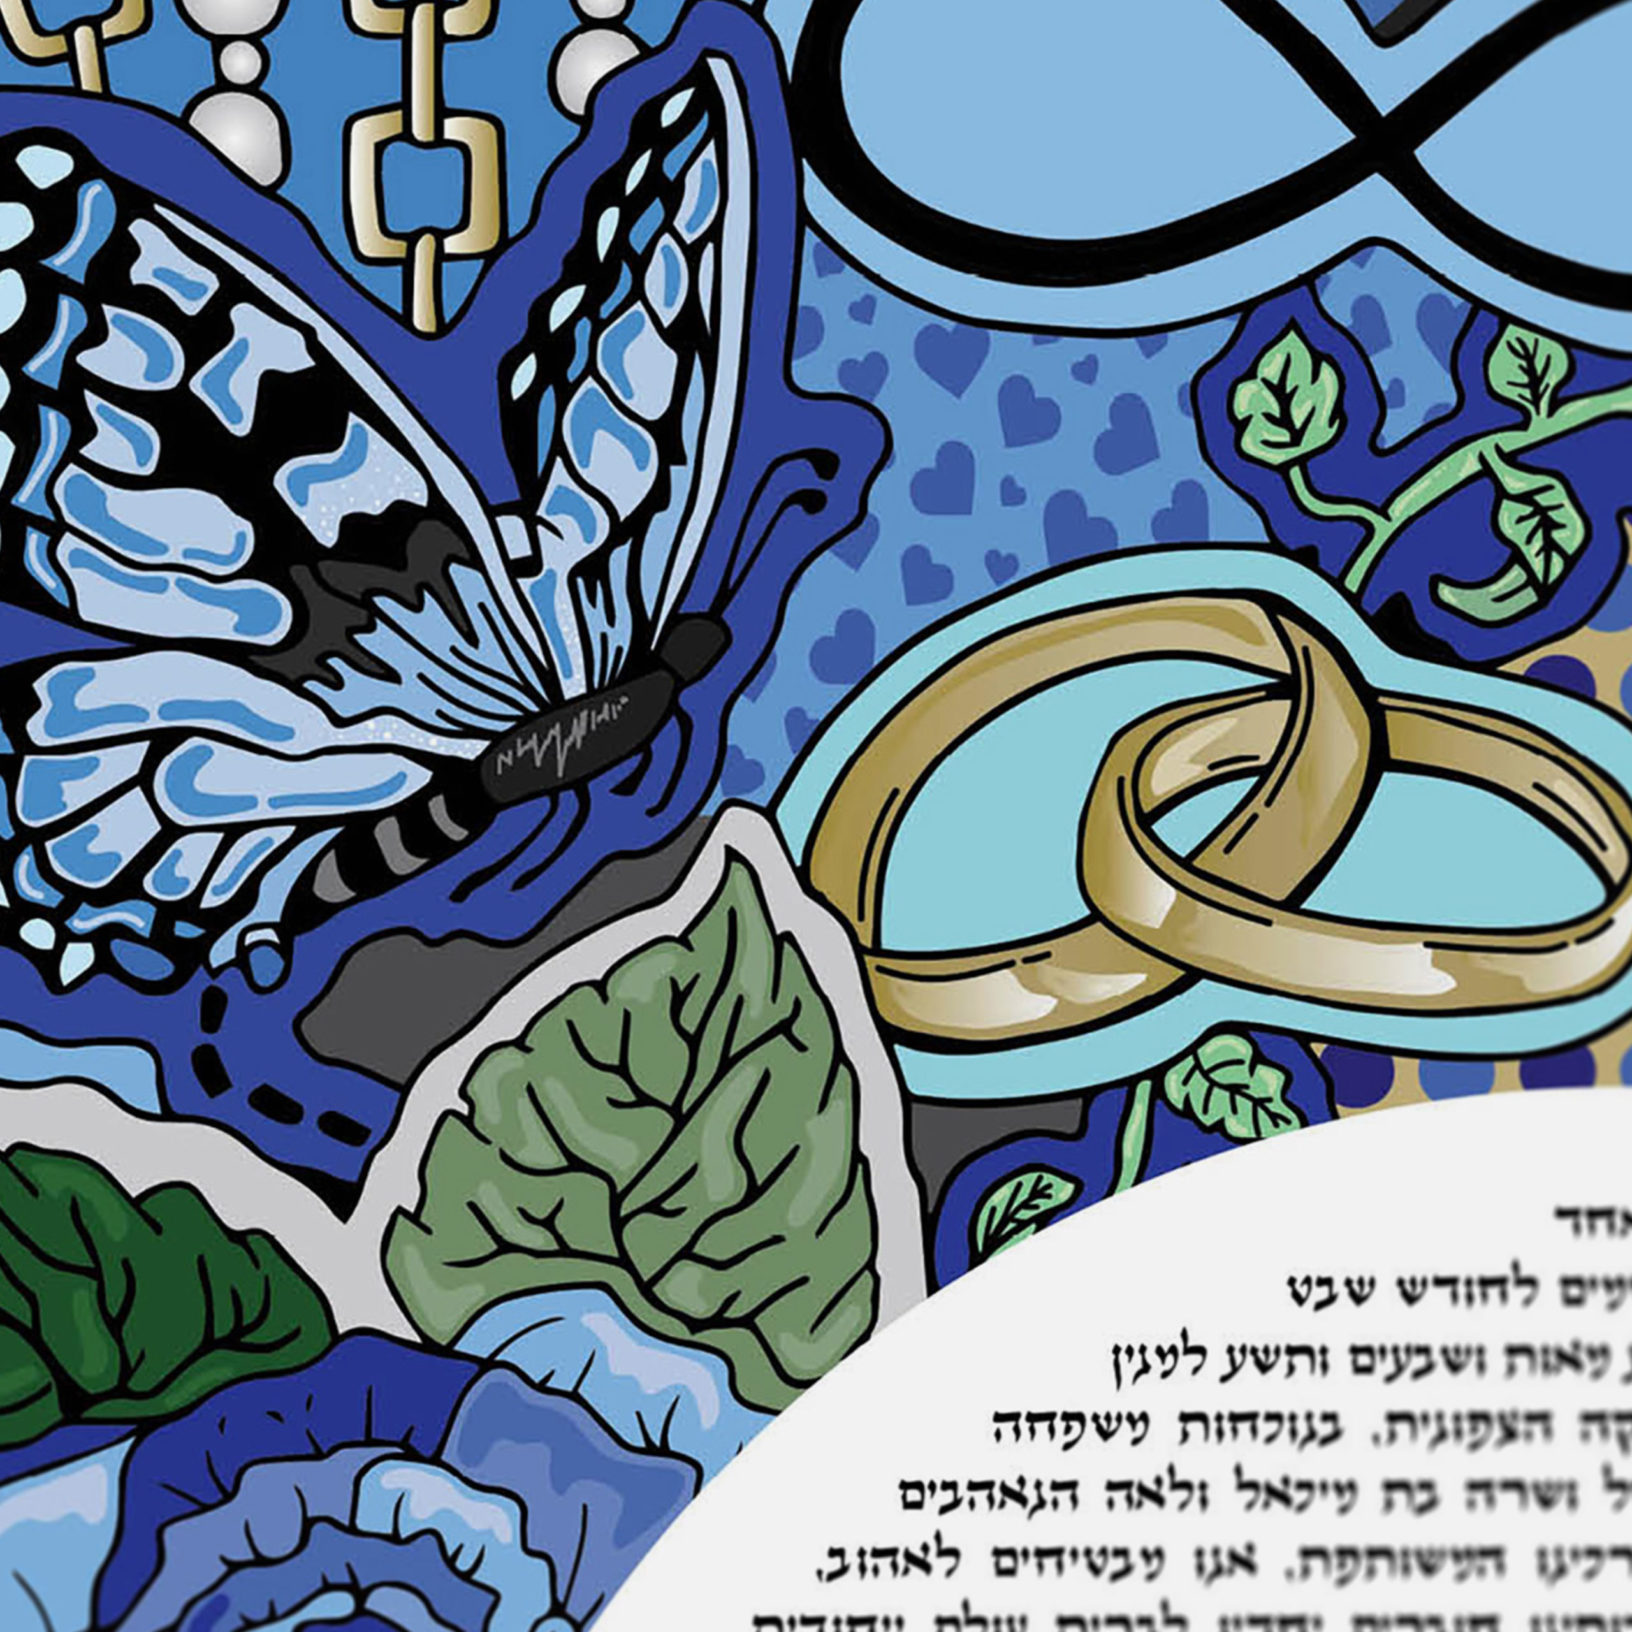 Sammy Handler Giclee Infinity and Beyond Blue Ketubah Jewish Wedding Contract